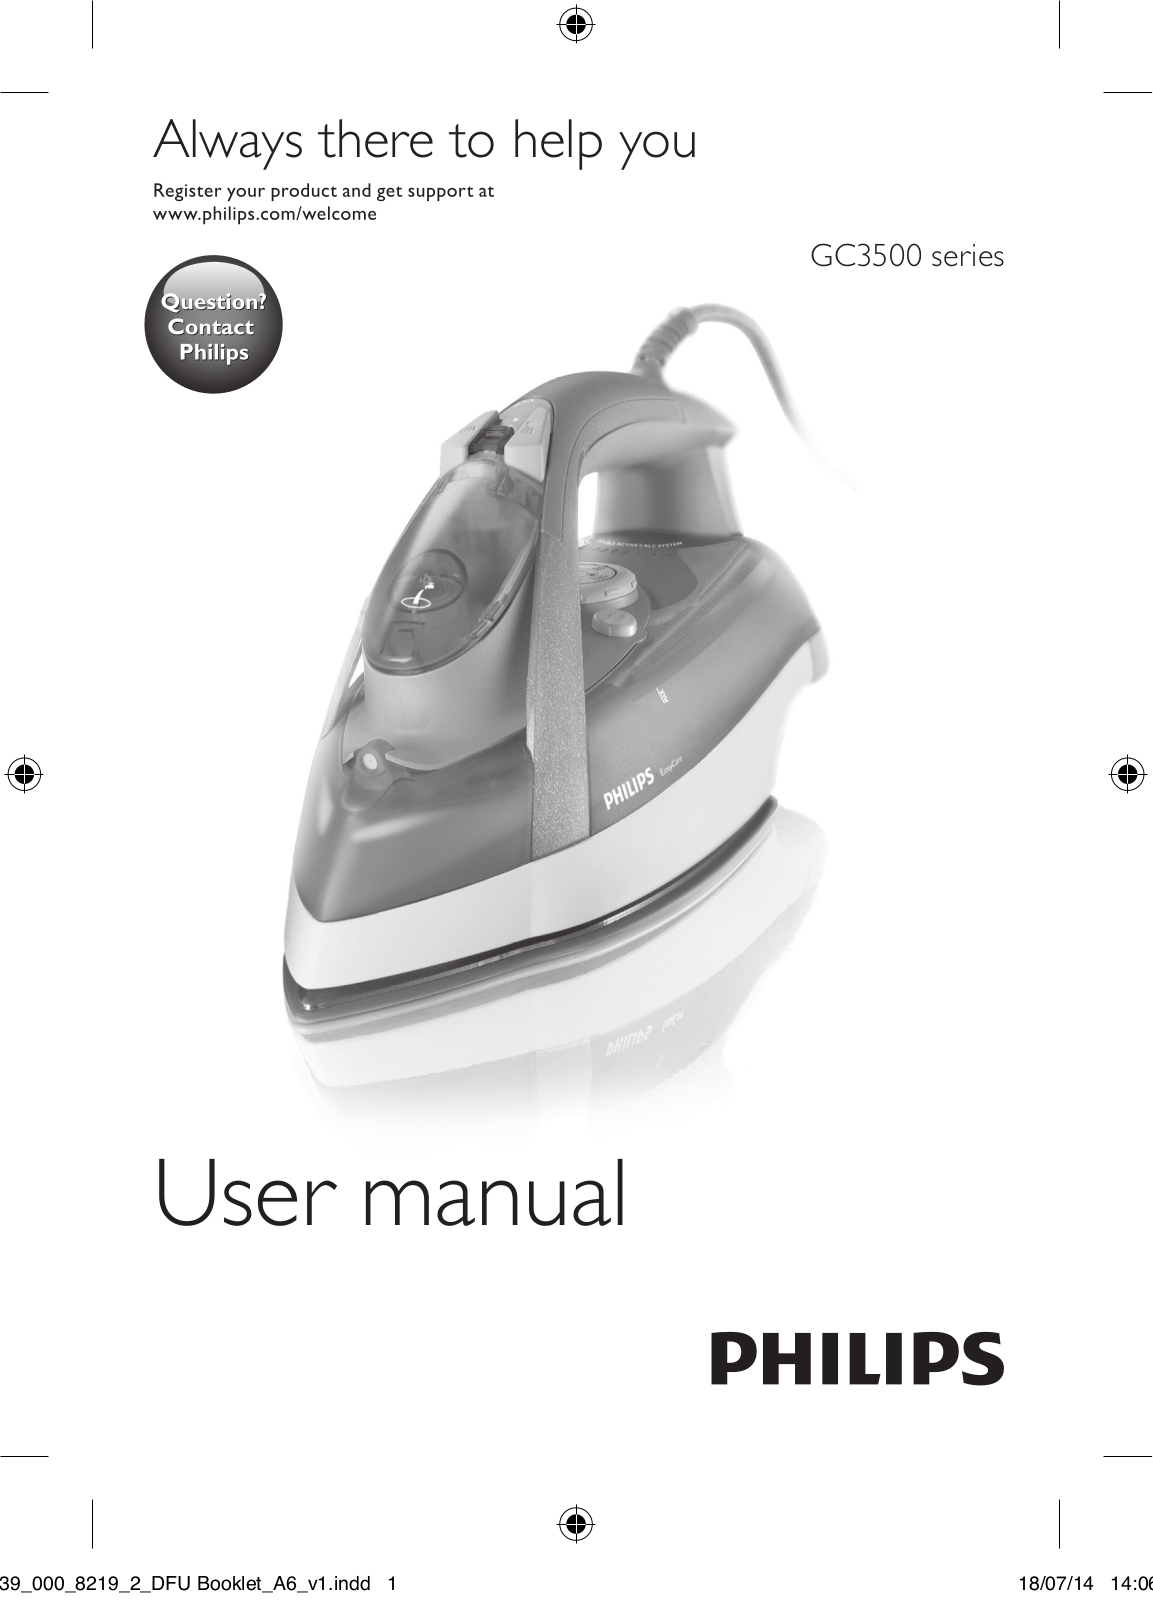 Philips GC3588 User Manual